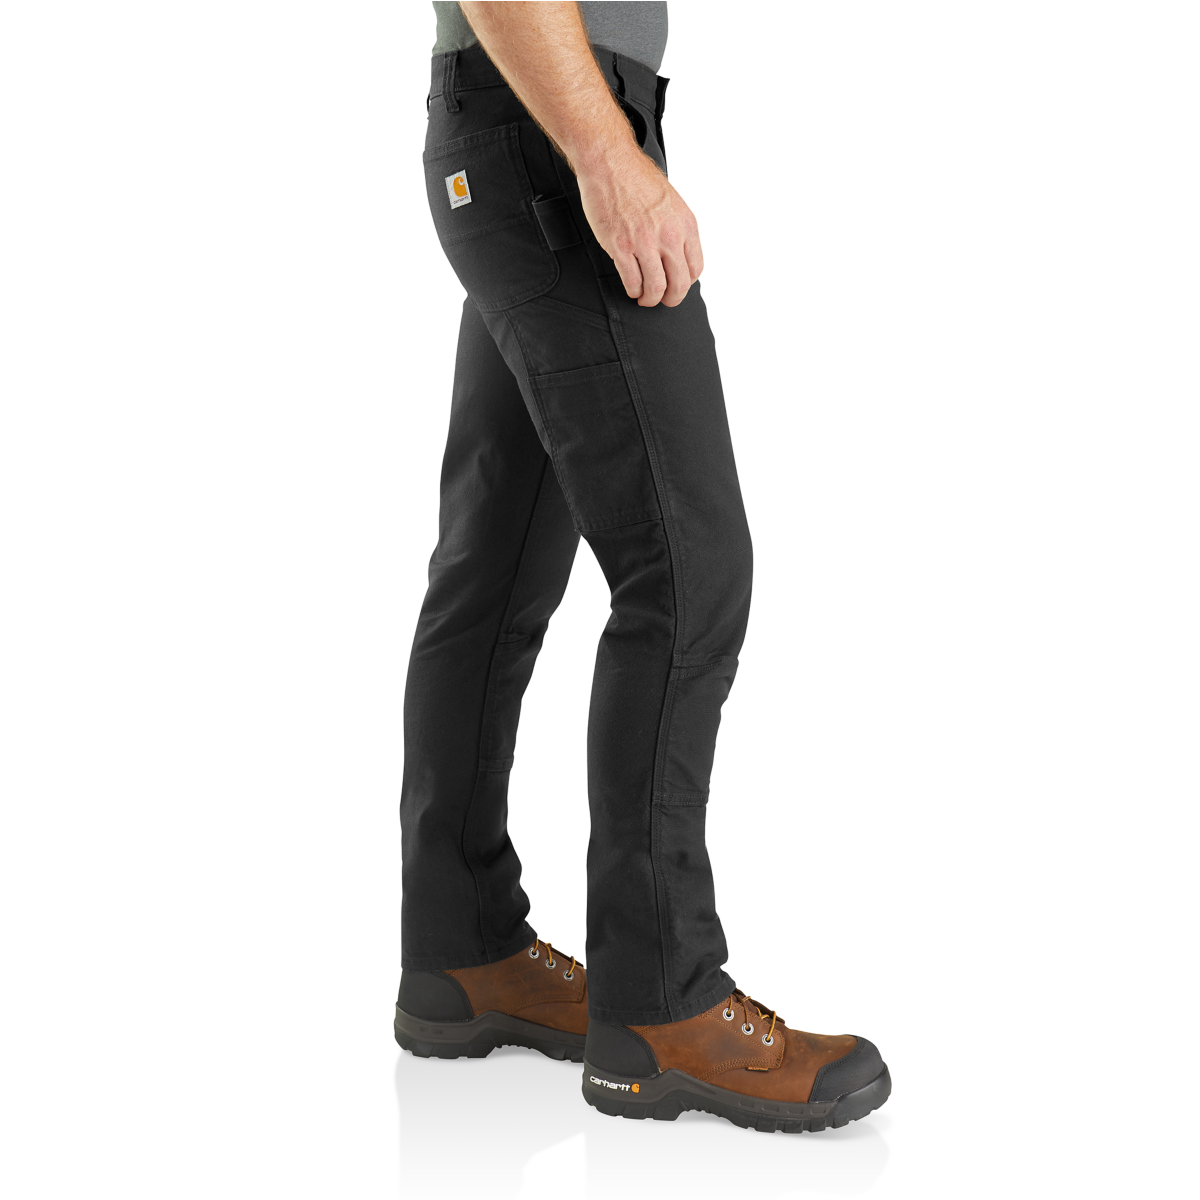 Buy Carhartt Pants, Jeans & Shorts New Zealand - Base Force